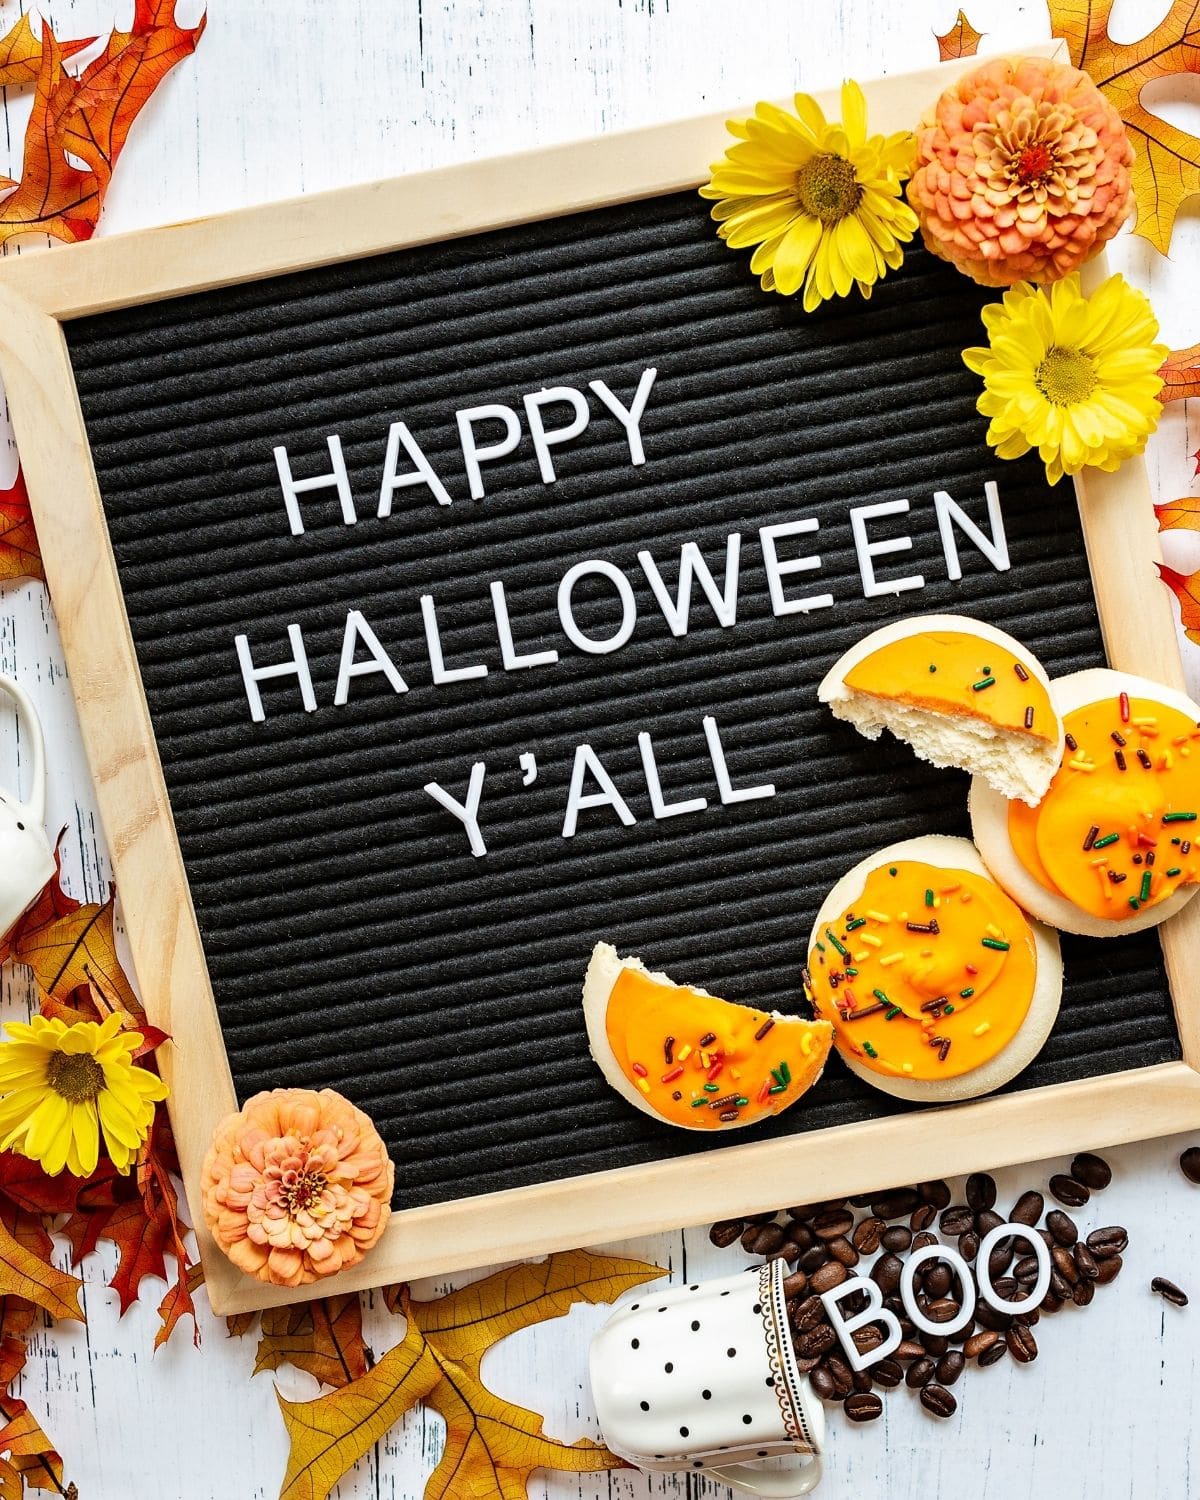 50 Fun Decorating Ideas for Halloween